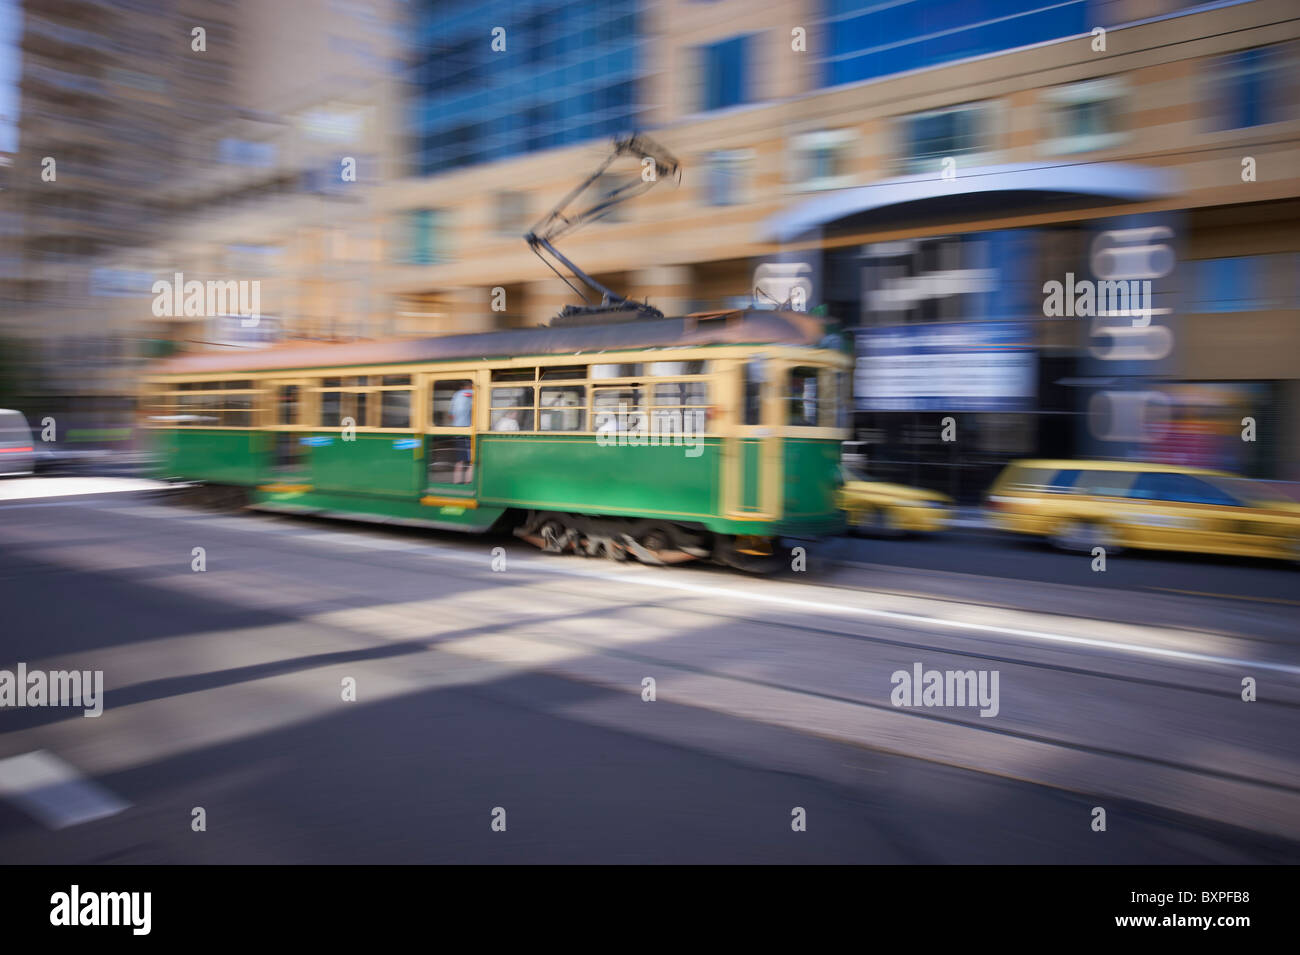 Melbourne tram in Chapel Street Prahran Stock Photo